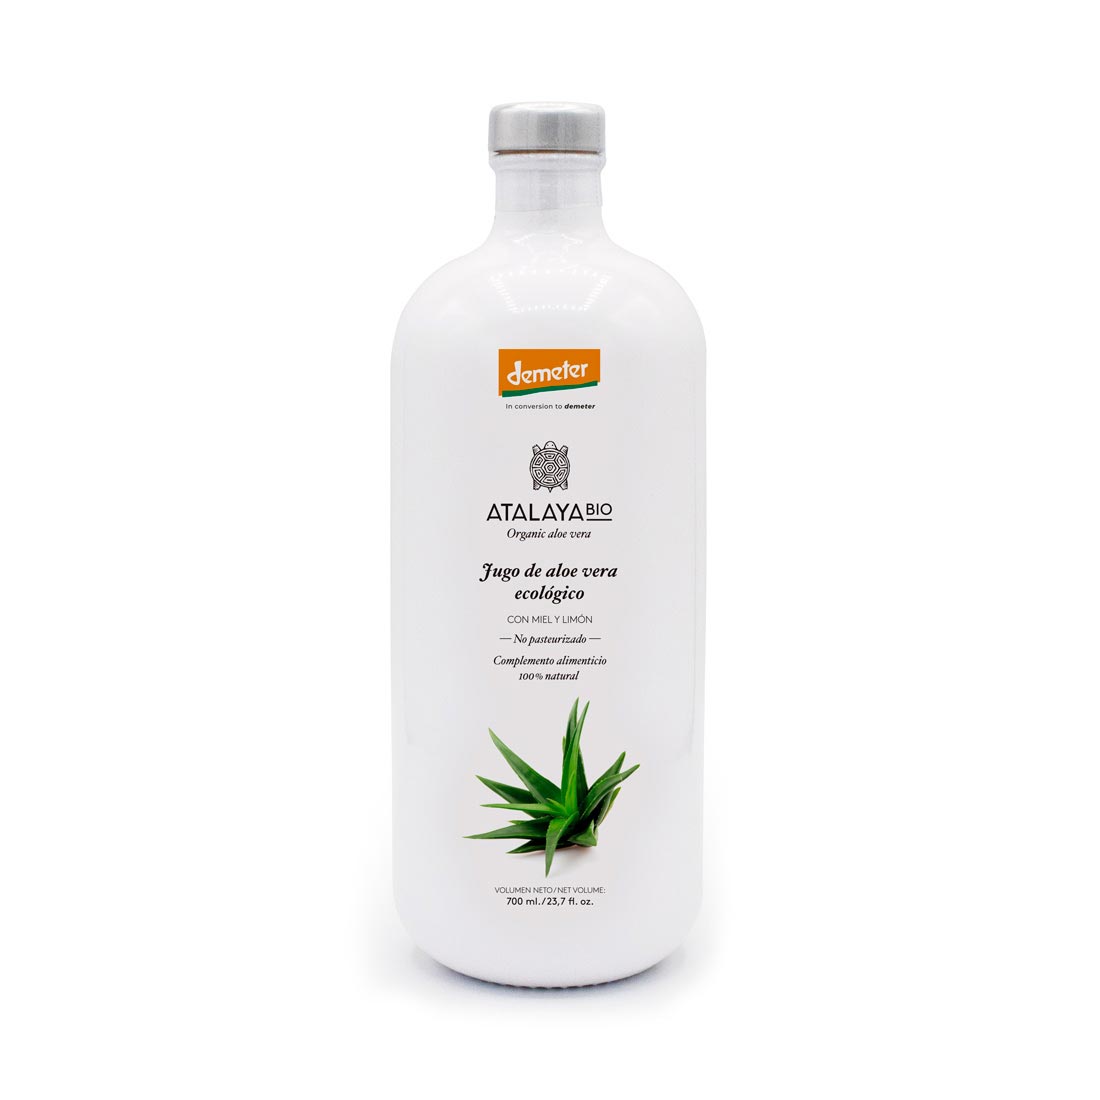 Biodynamic Pure Aloe Vera Juice (96%) with Honey and Lemon